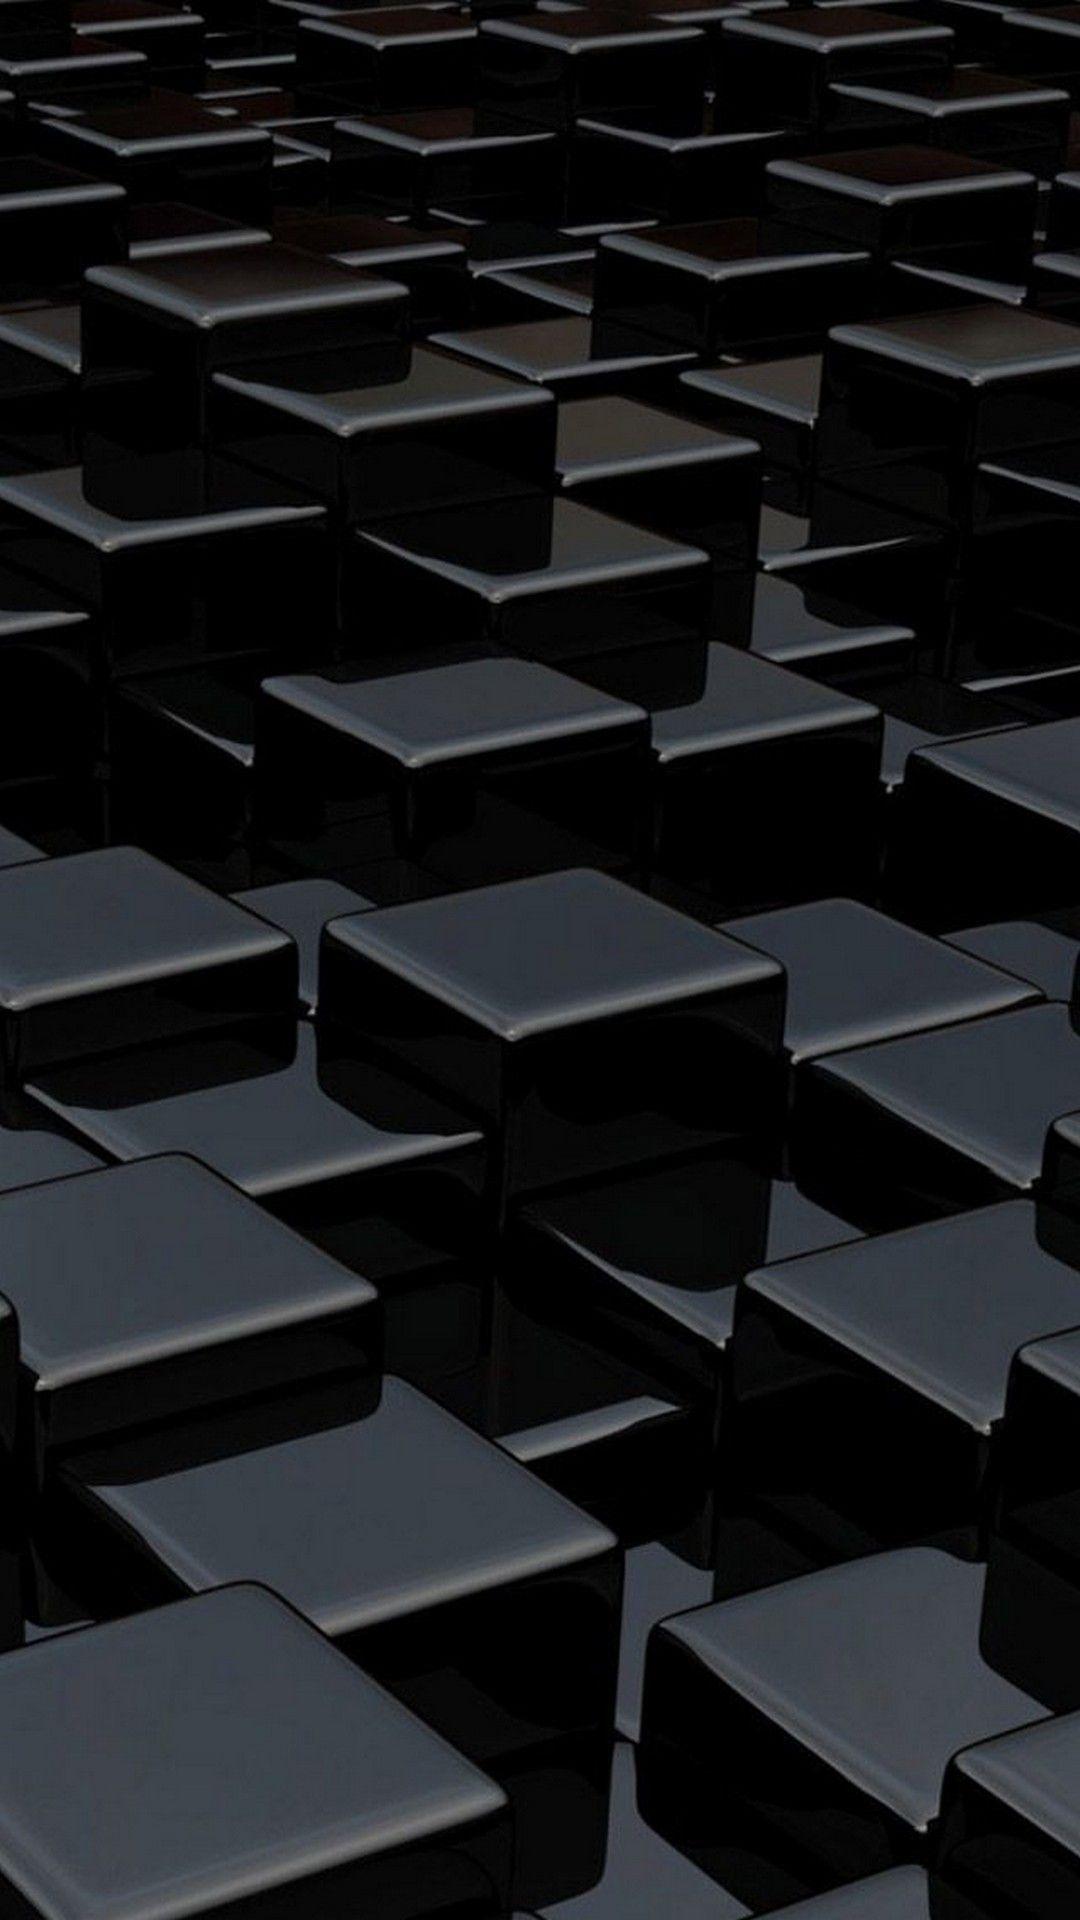 3D Black Cubes iPhone Wallpapers - Wallpaper Cave